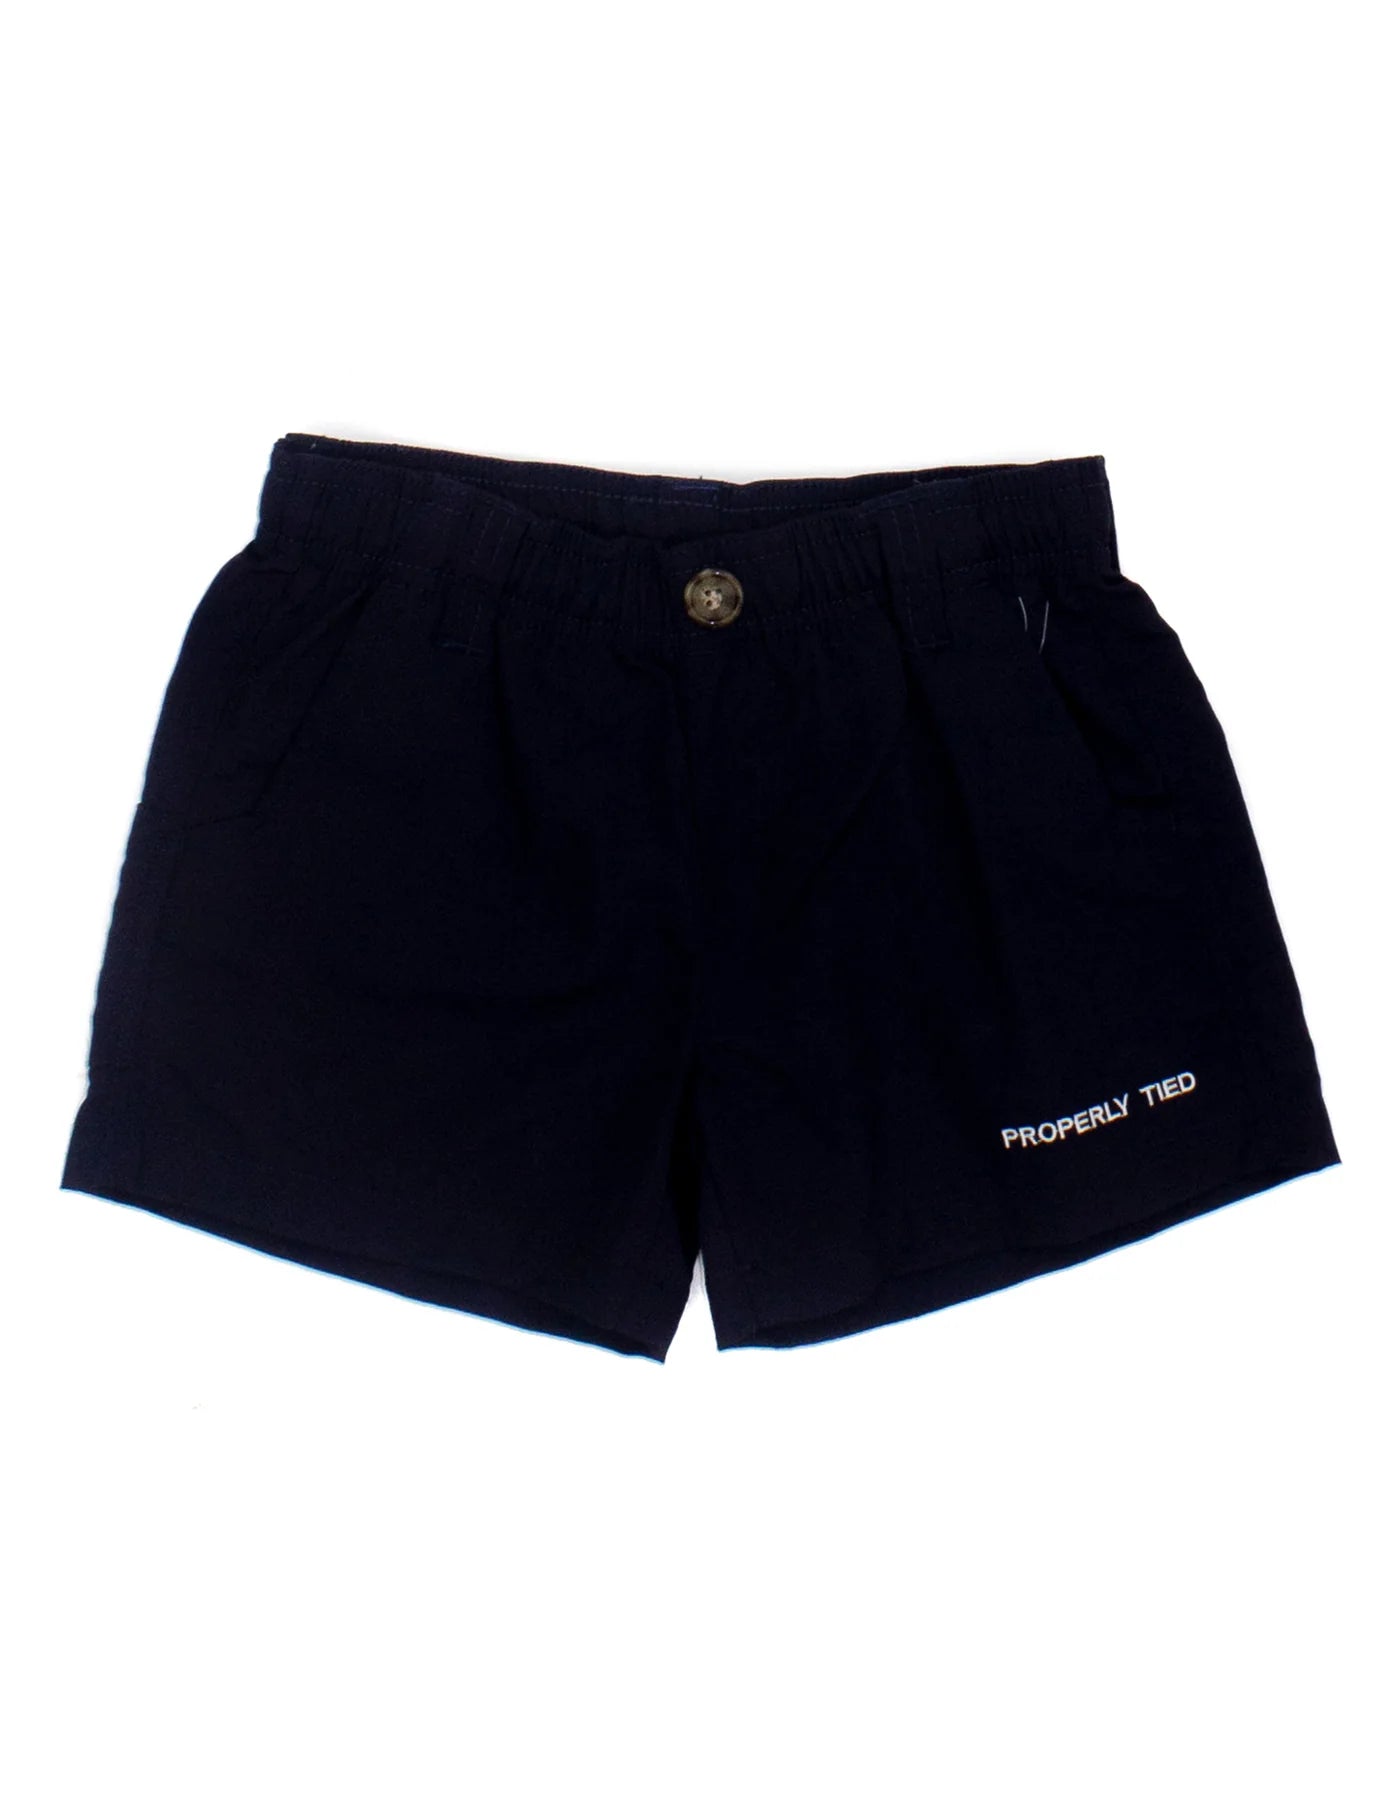 Mallard Shorts - Black